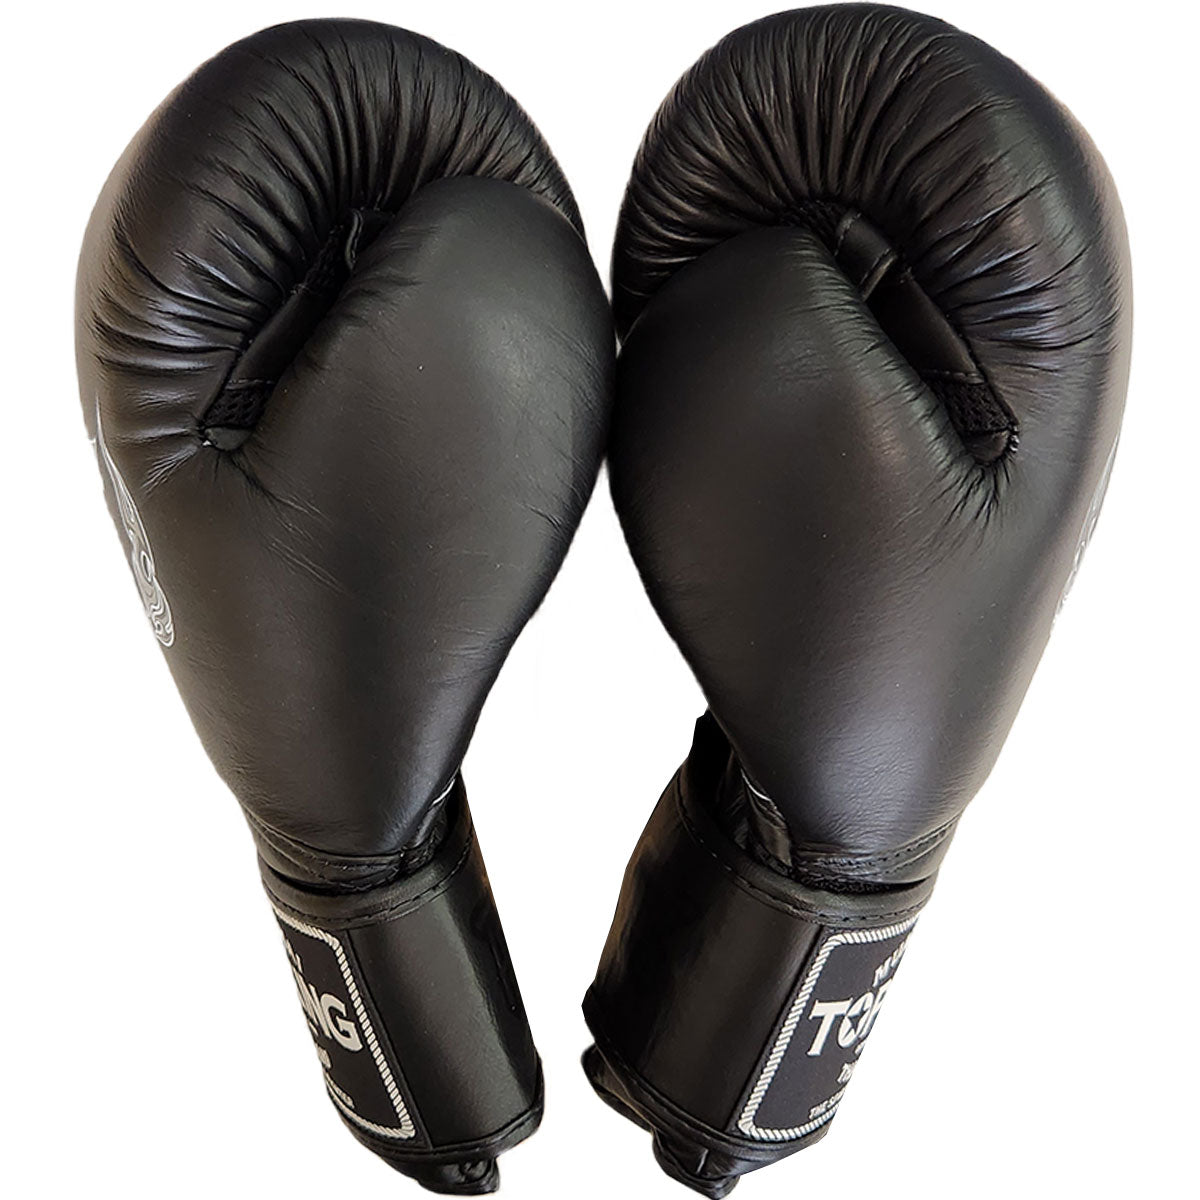 Boxing Gloves Top King TKBGSA Air Black Muay Thai